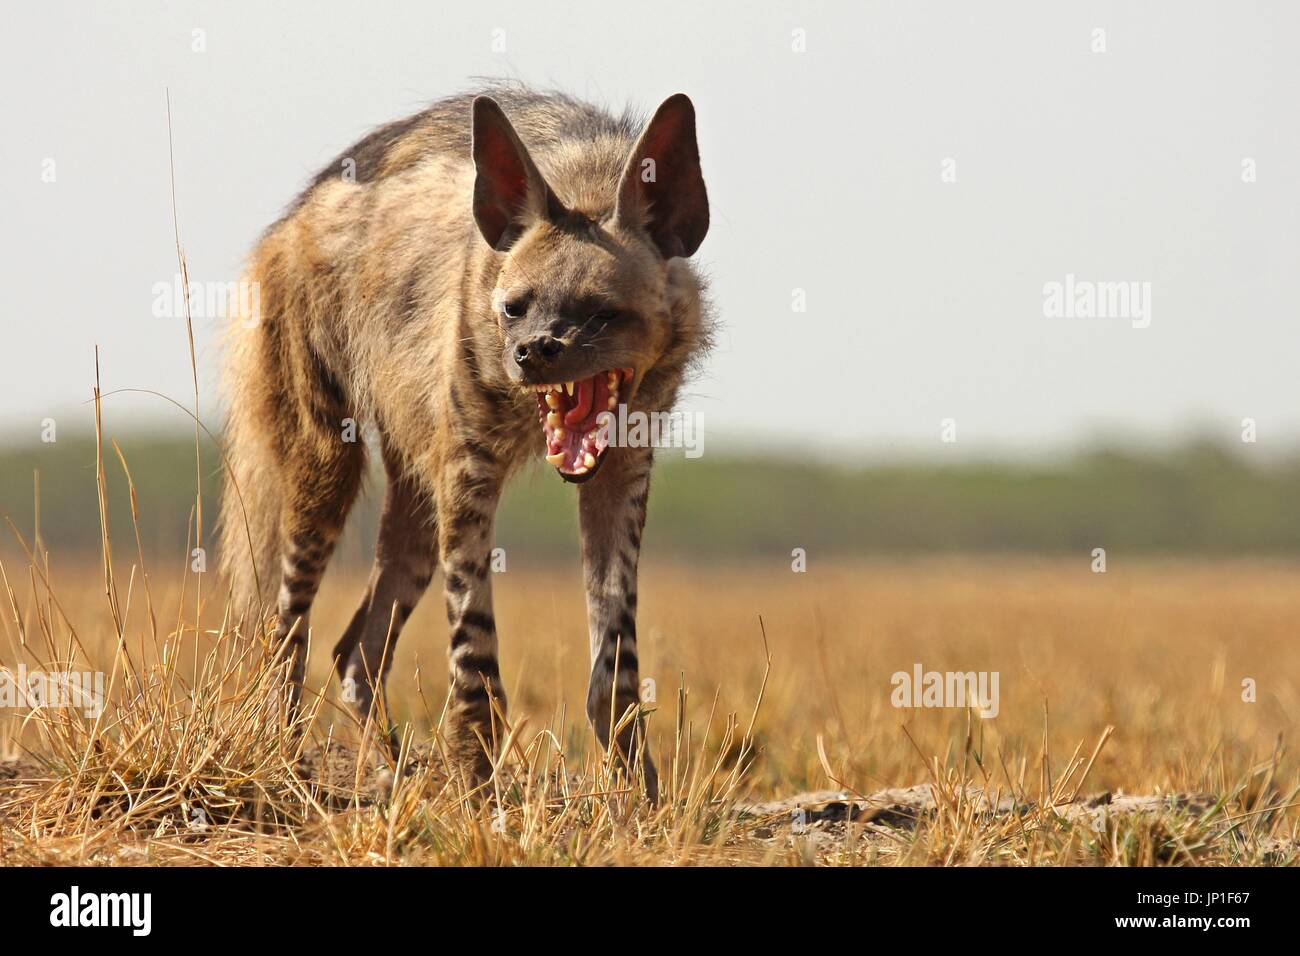 Striped Hyena showing its powerful jaws Stock Photo